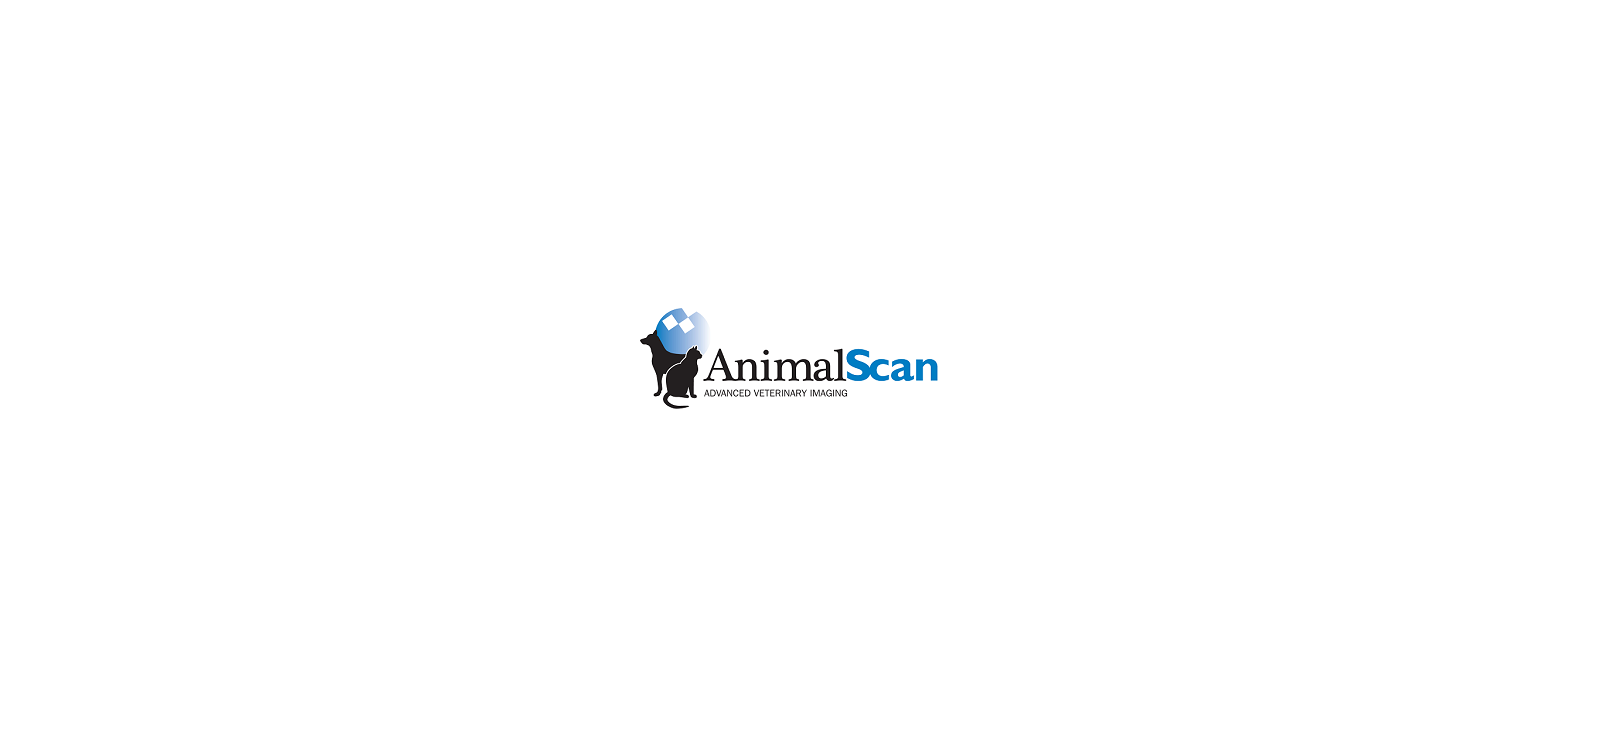 AnimalScan Office